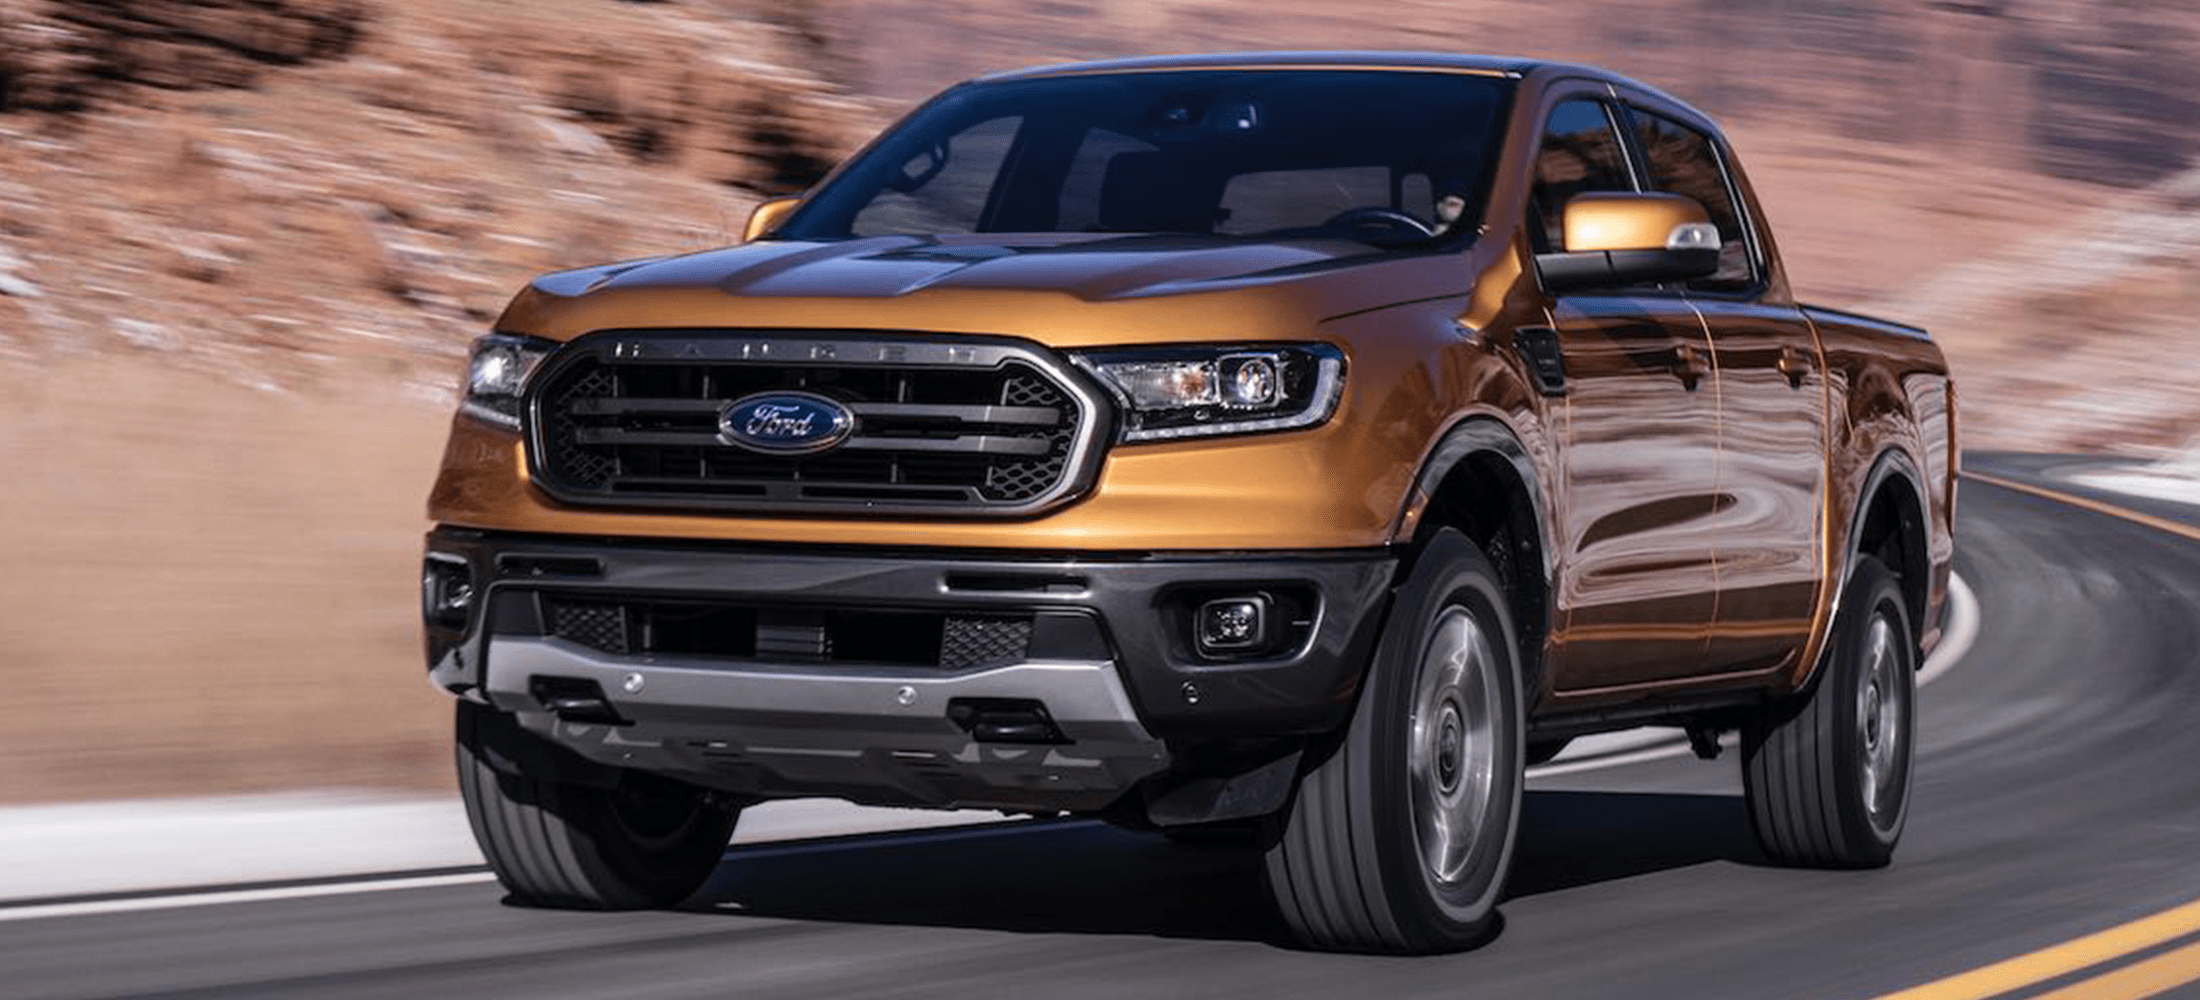 Ford Ranger 2019 Leistung